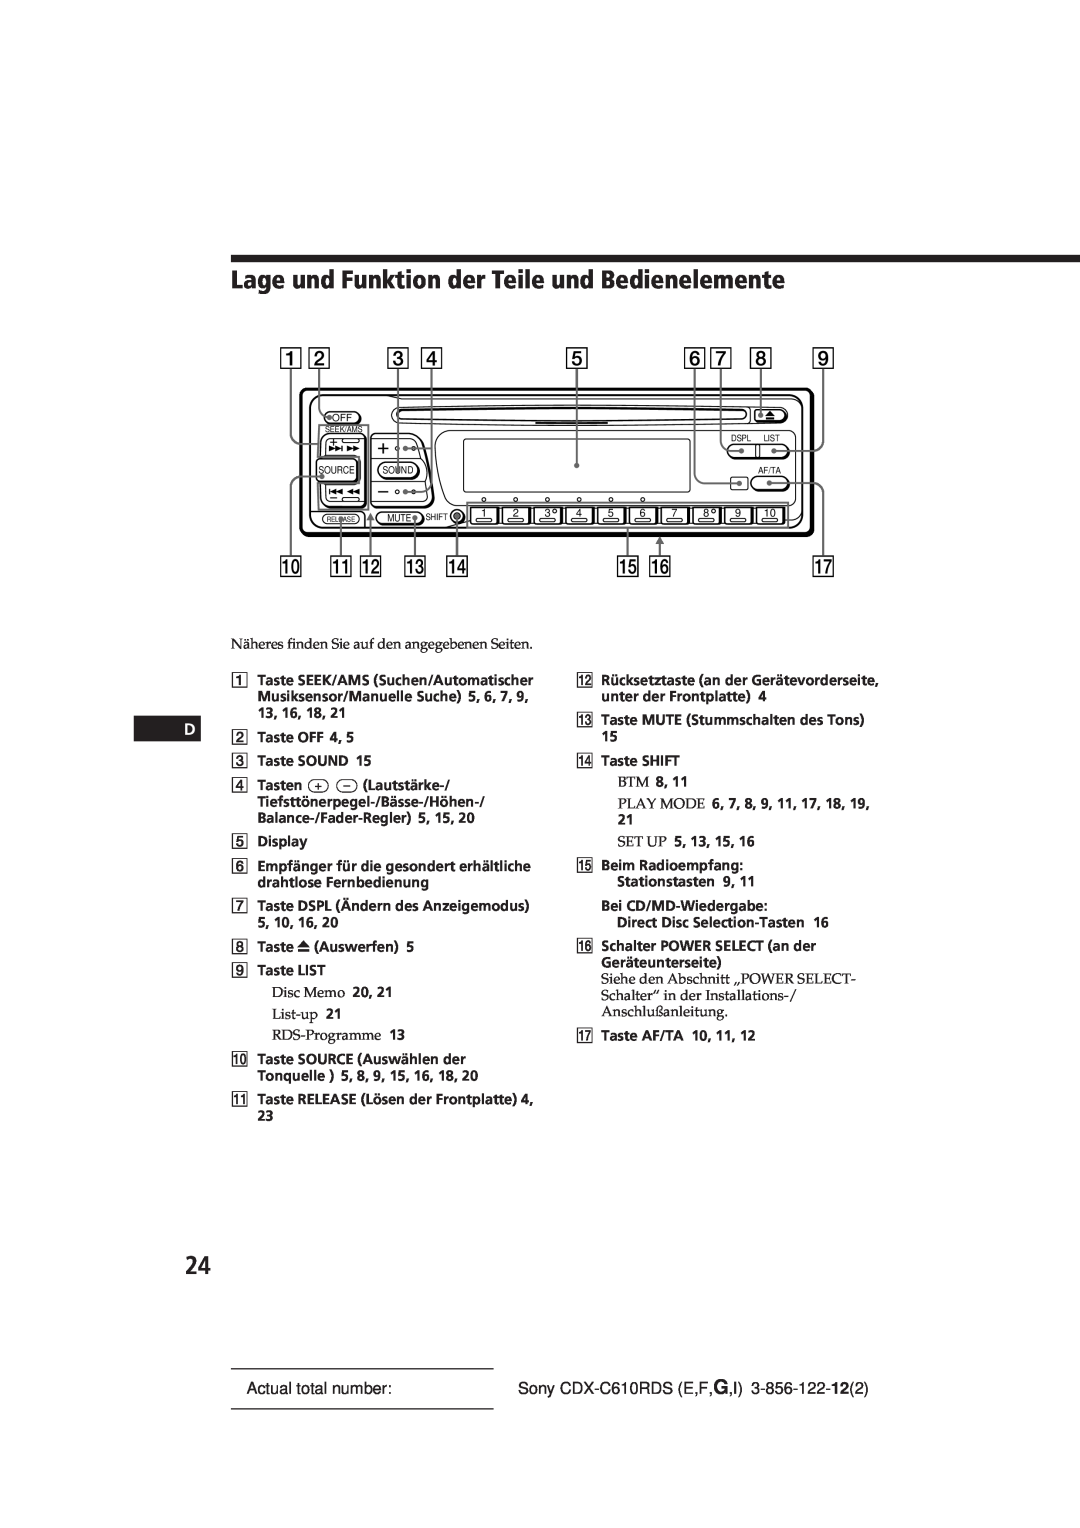 Sony manual Lage und Funktion der Teile und Bedienelemente, Actual total number, Sony CDX-C610RDSE,F,G,I 